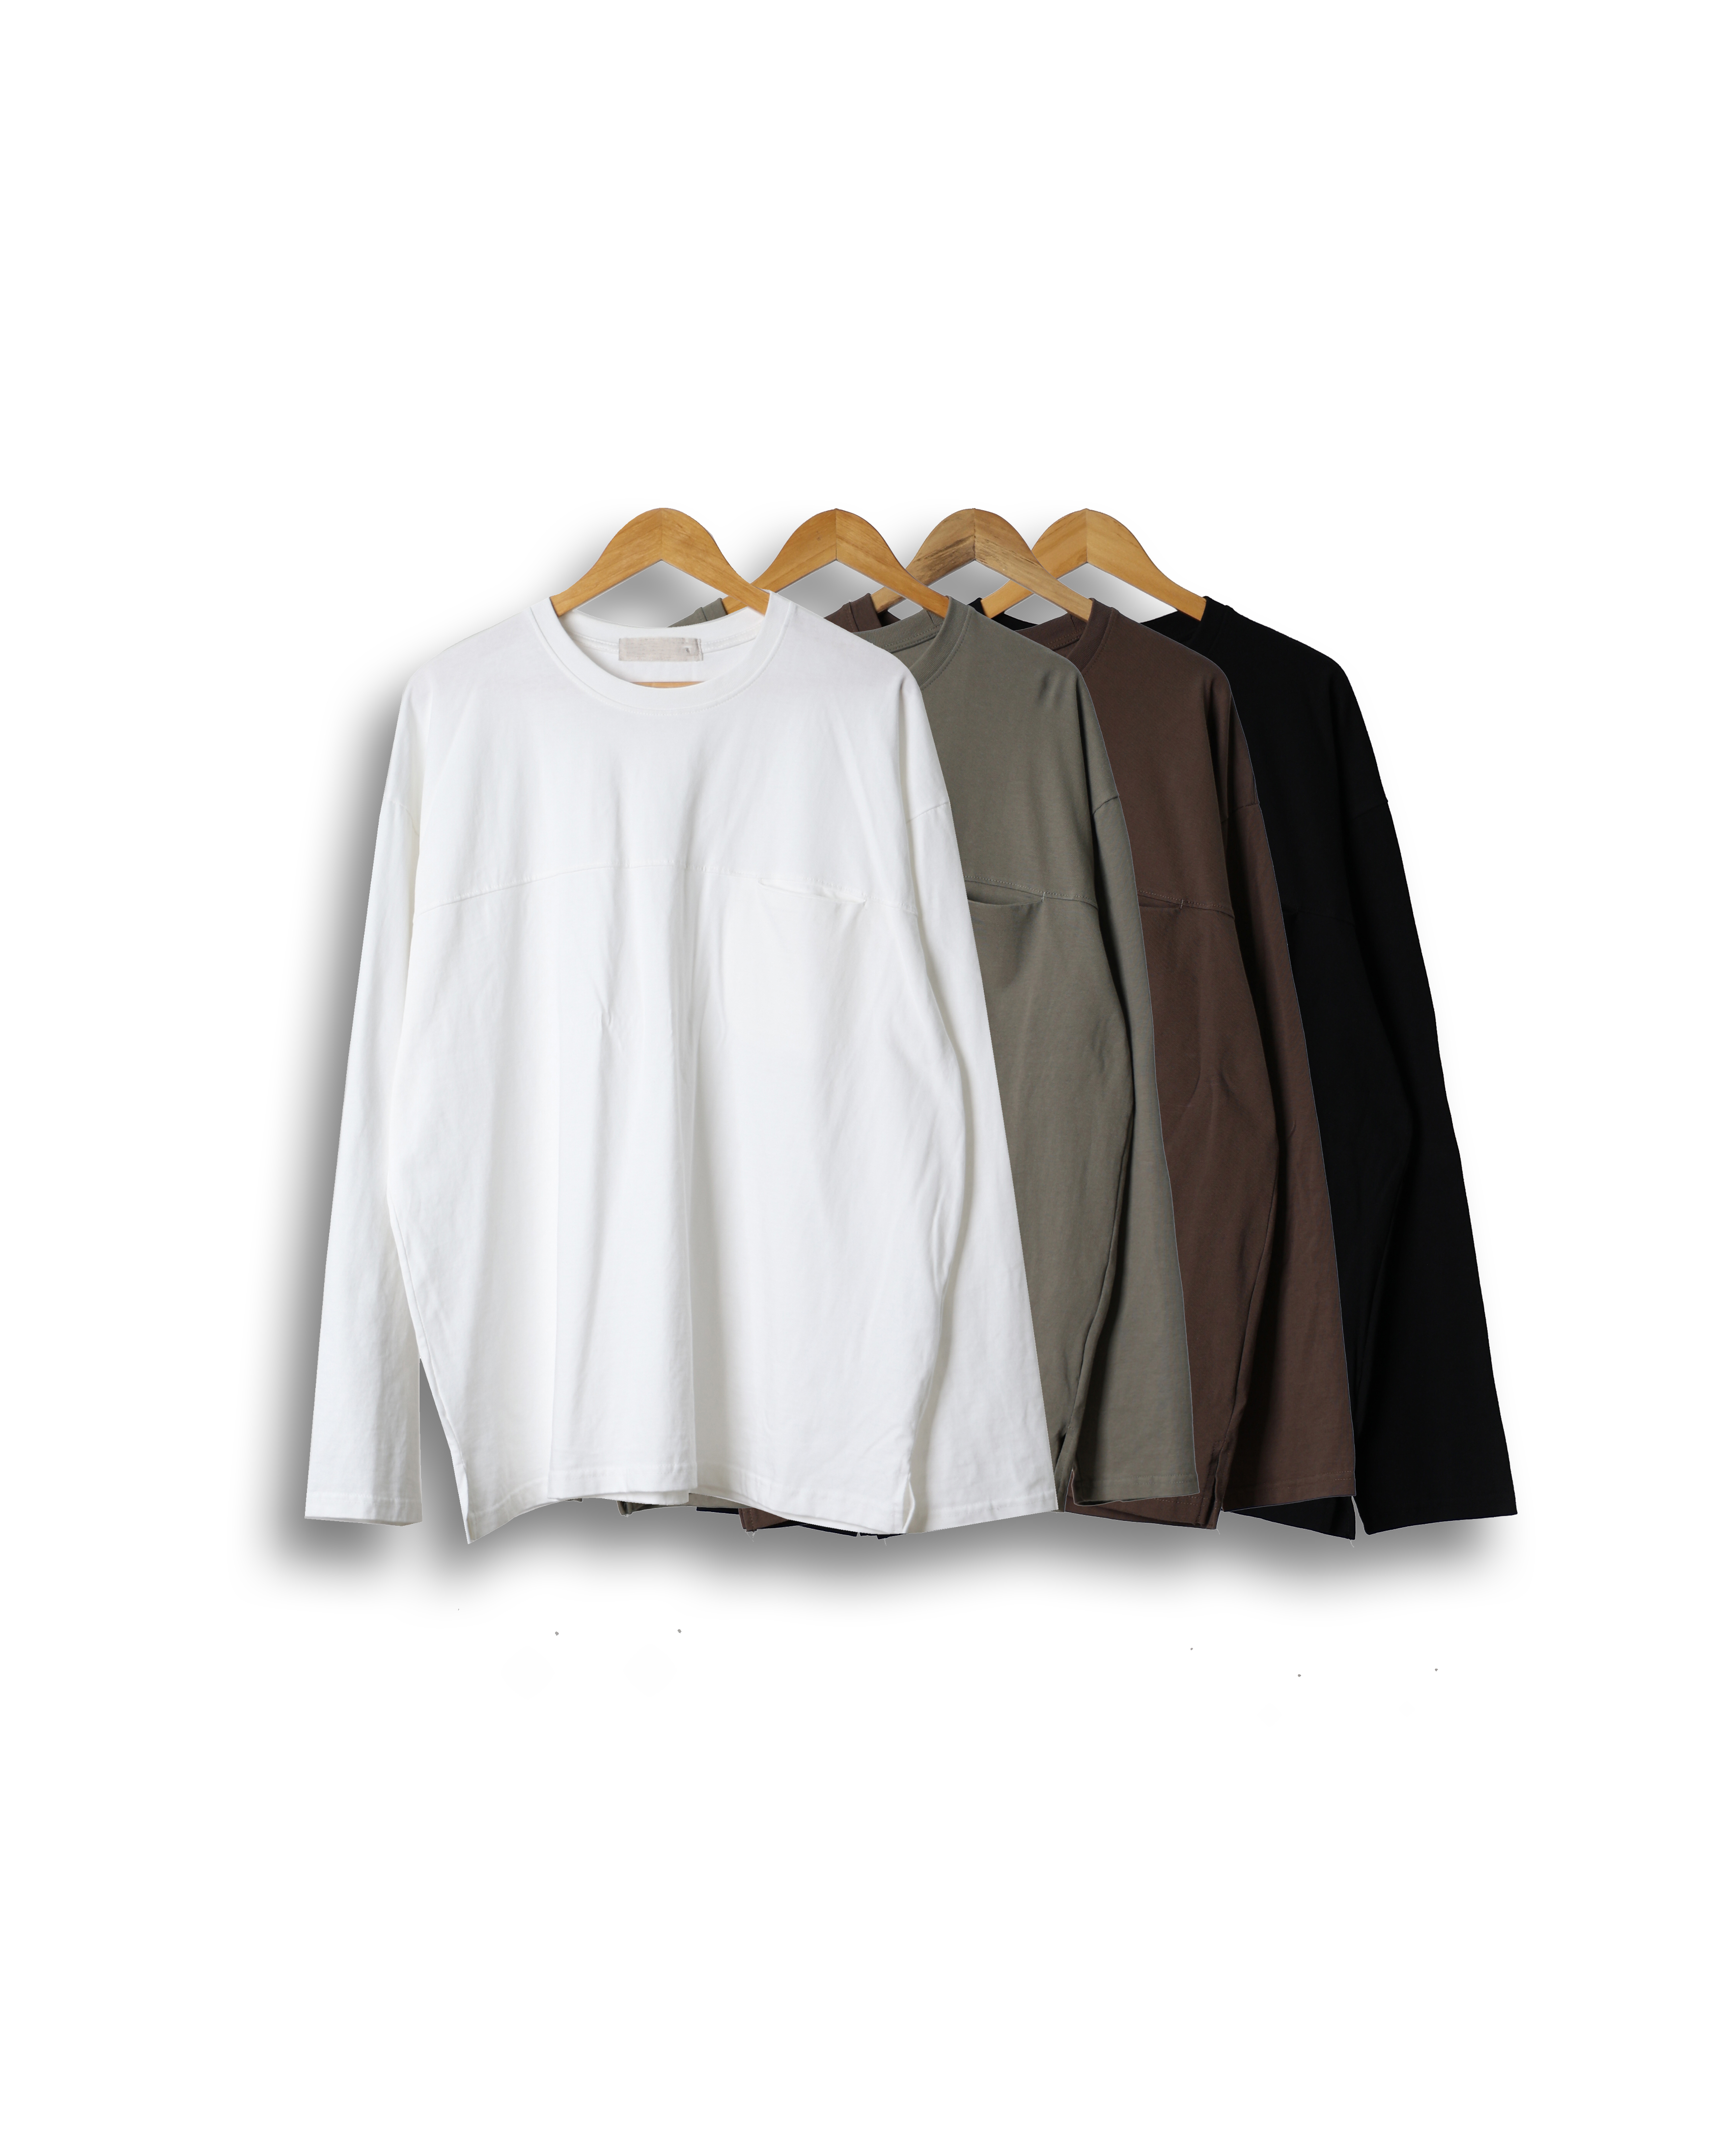 GAUGE Parting Pocket Long Sleeves (Black/Brown/Olive/Ivory)